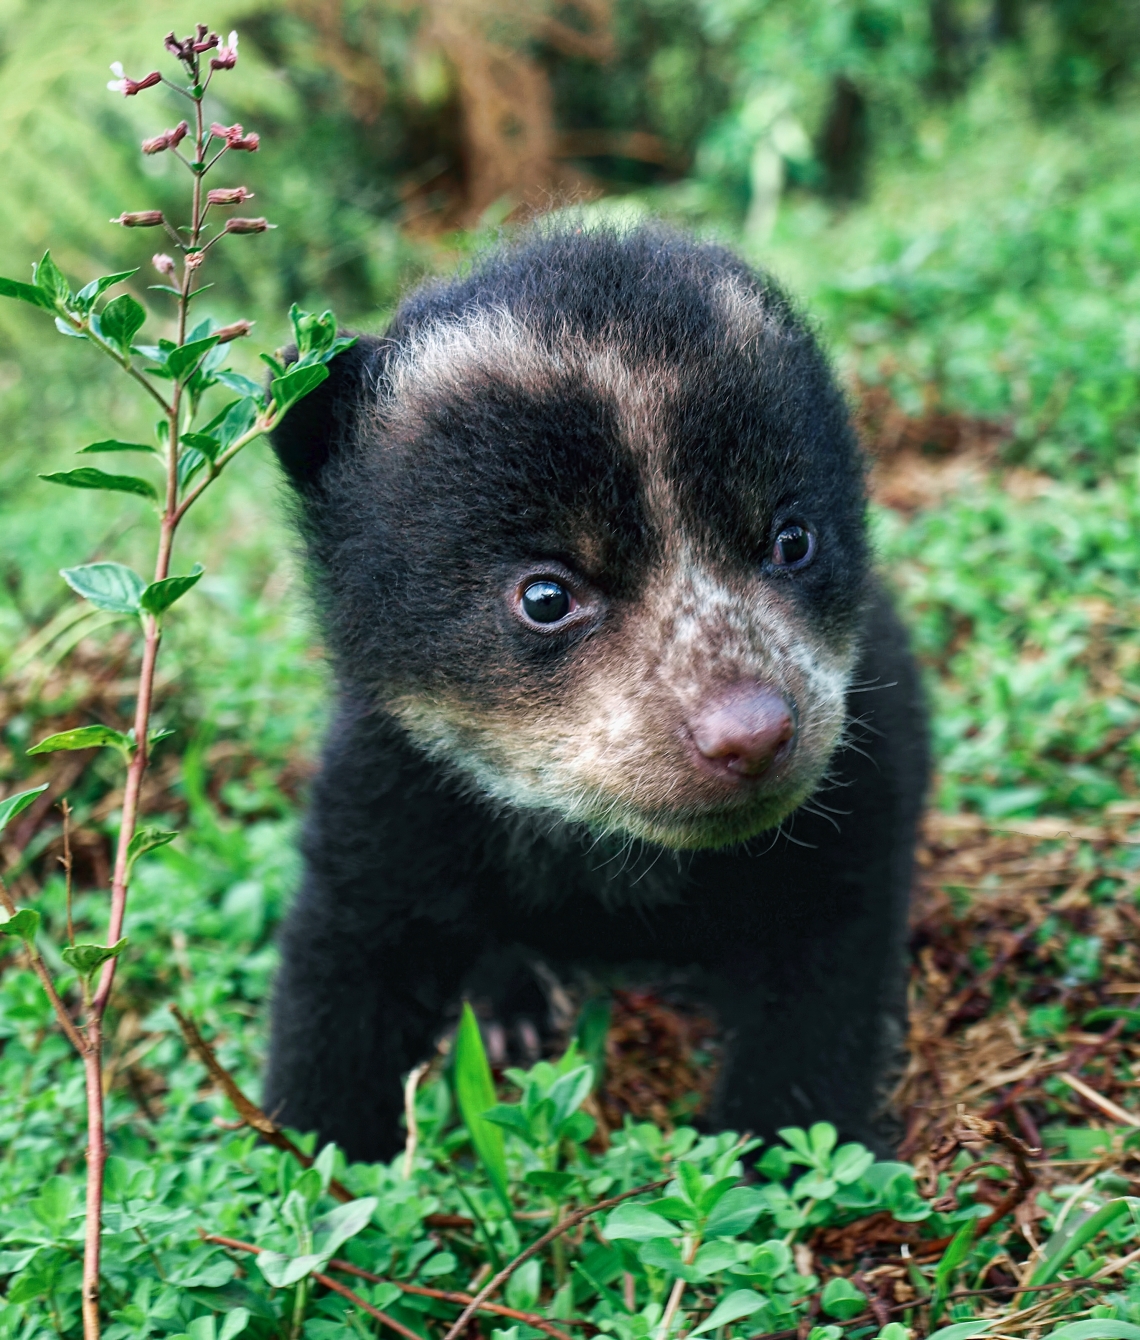 Andean bear_T ornatus_Ecuador_ bear cub with distinct markings_Alandy Torres